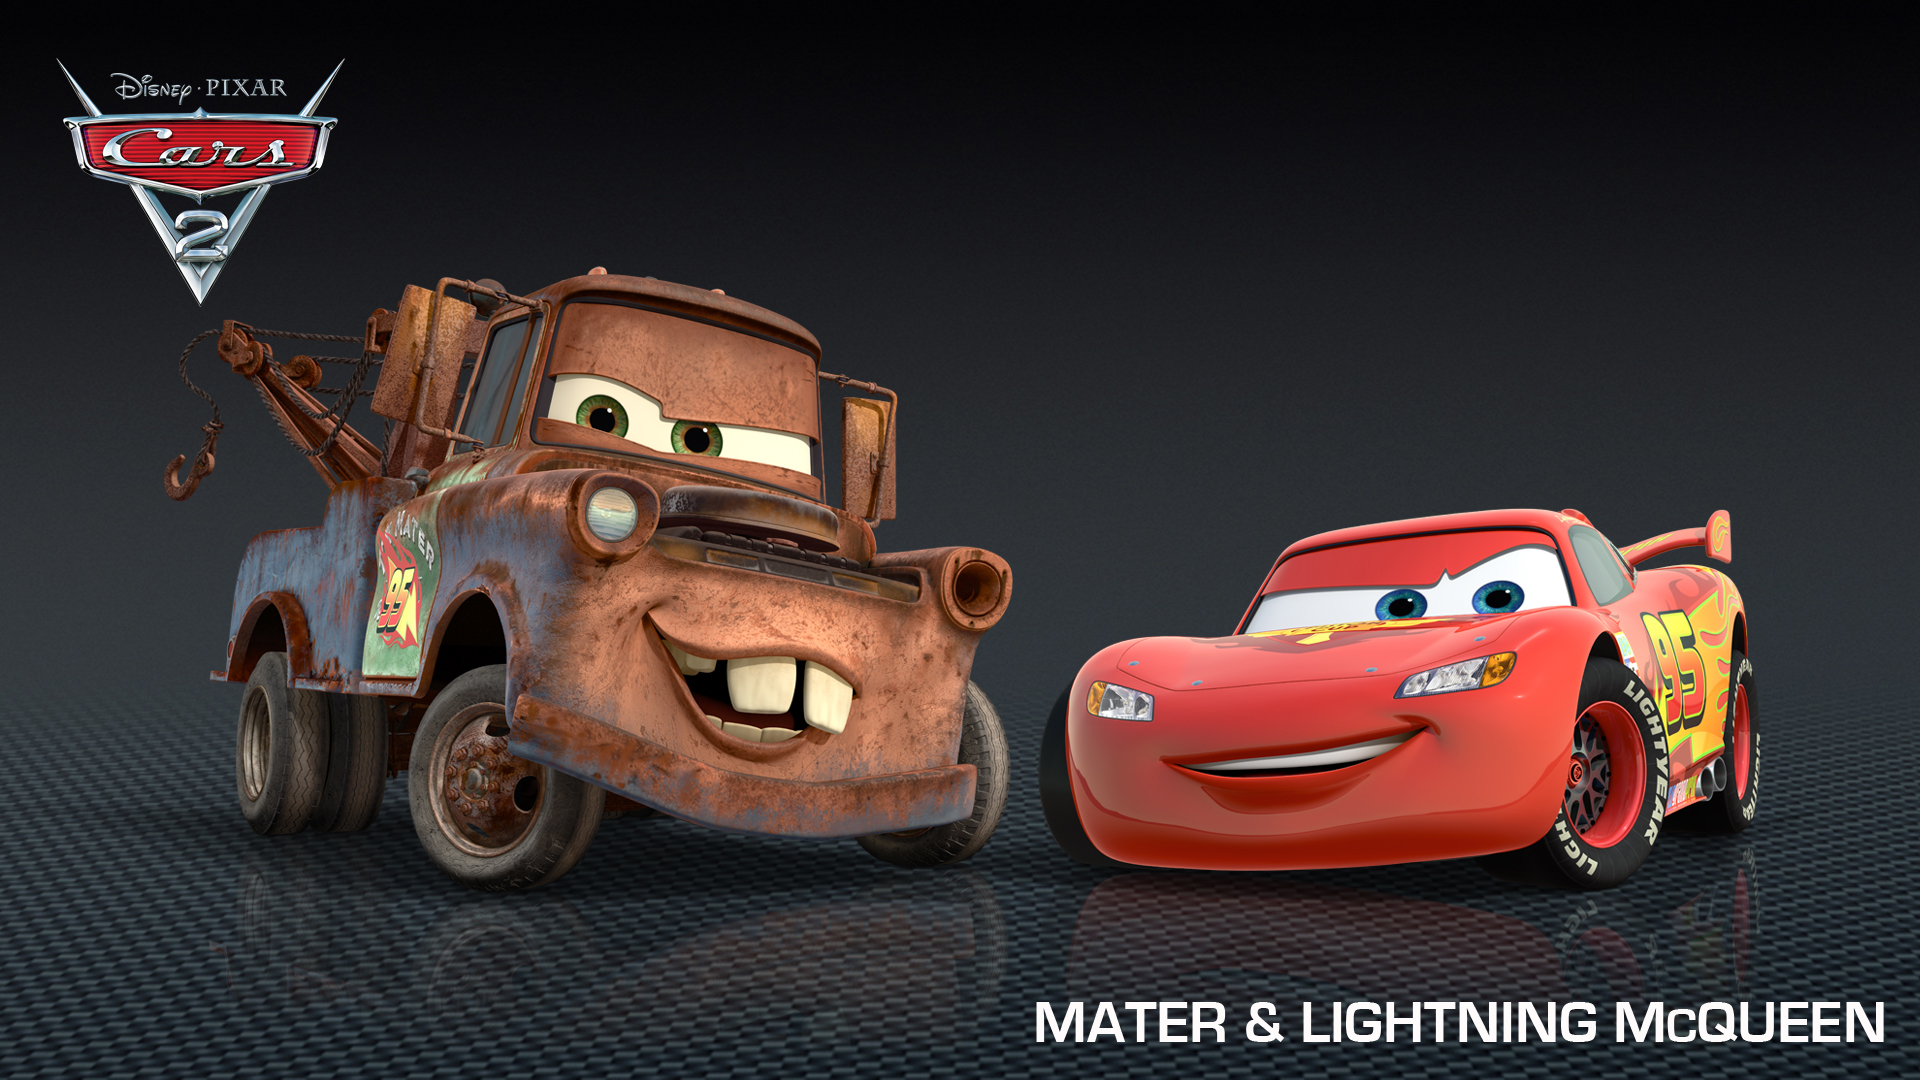 More Cars 2 Character Image, Descriptions, Video